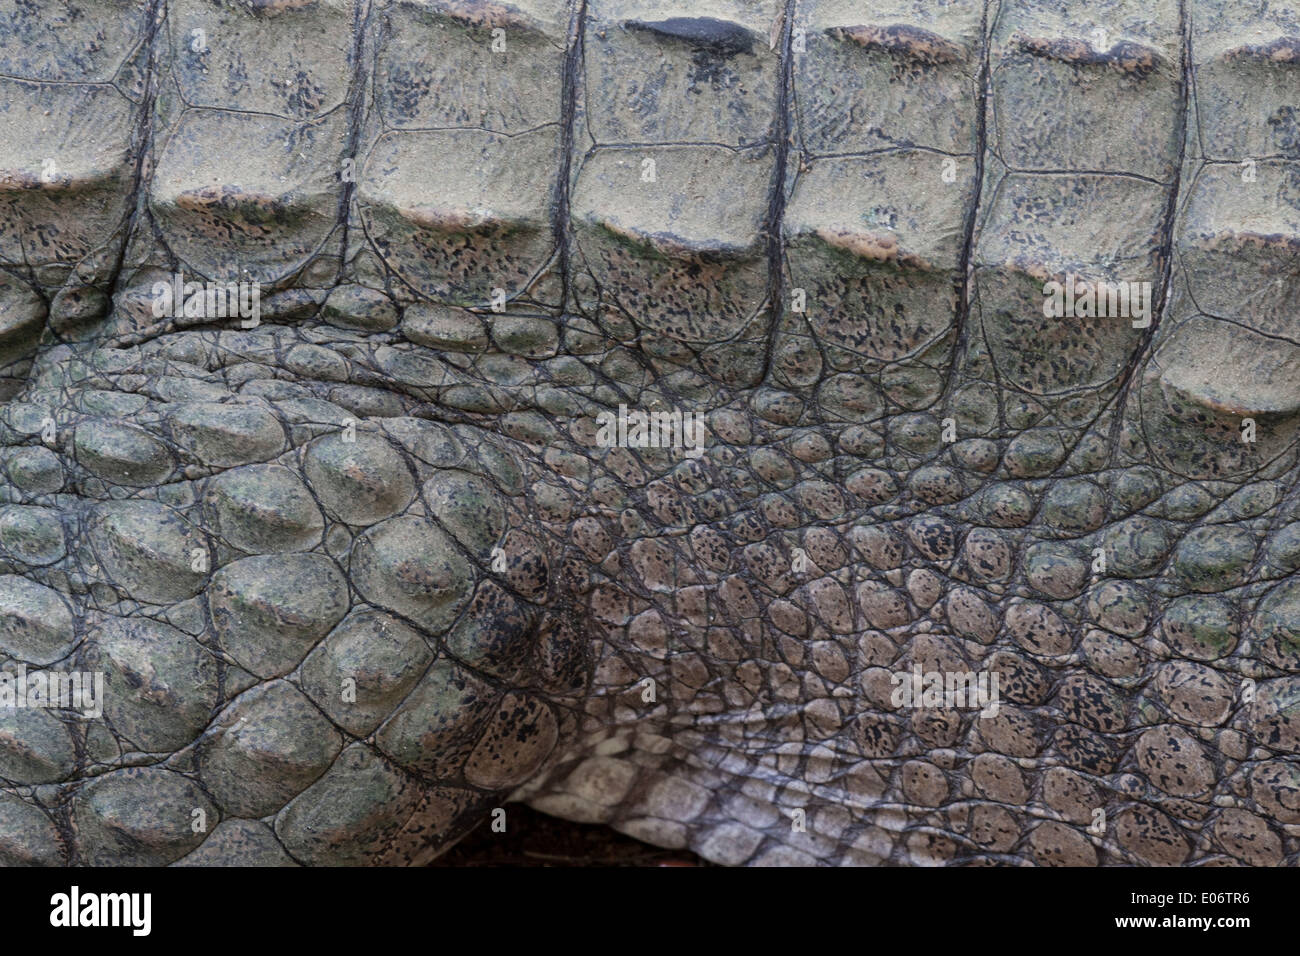 Crocodile close up detail Stock Photo